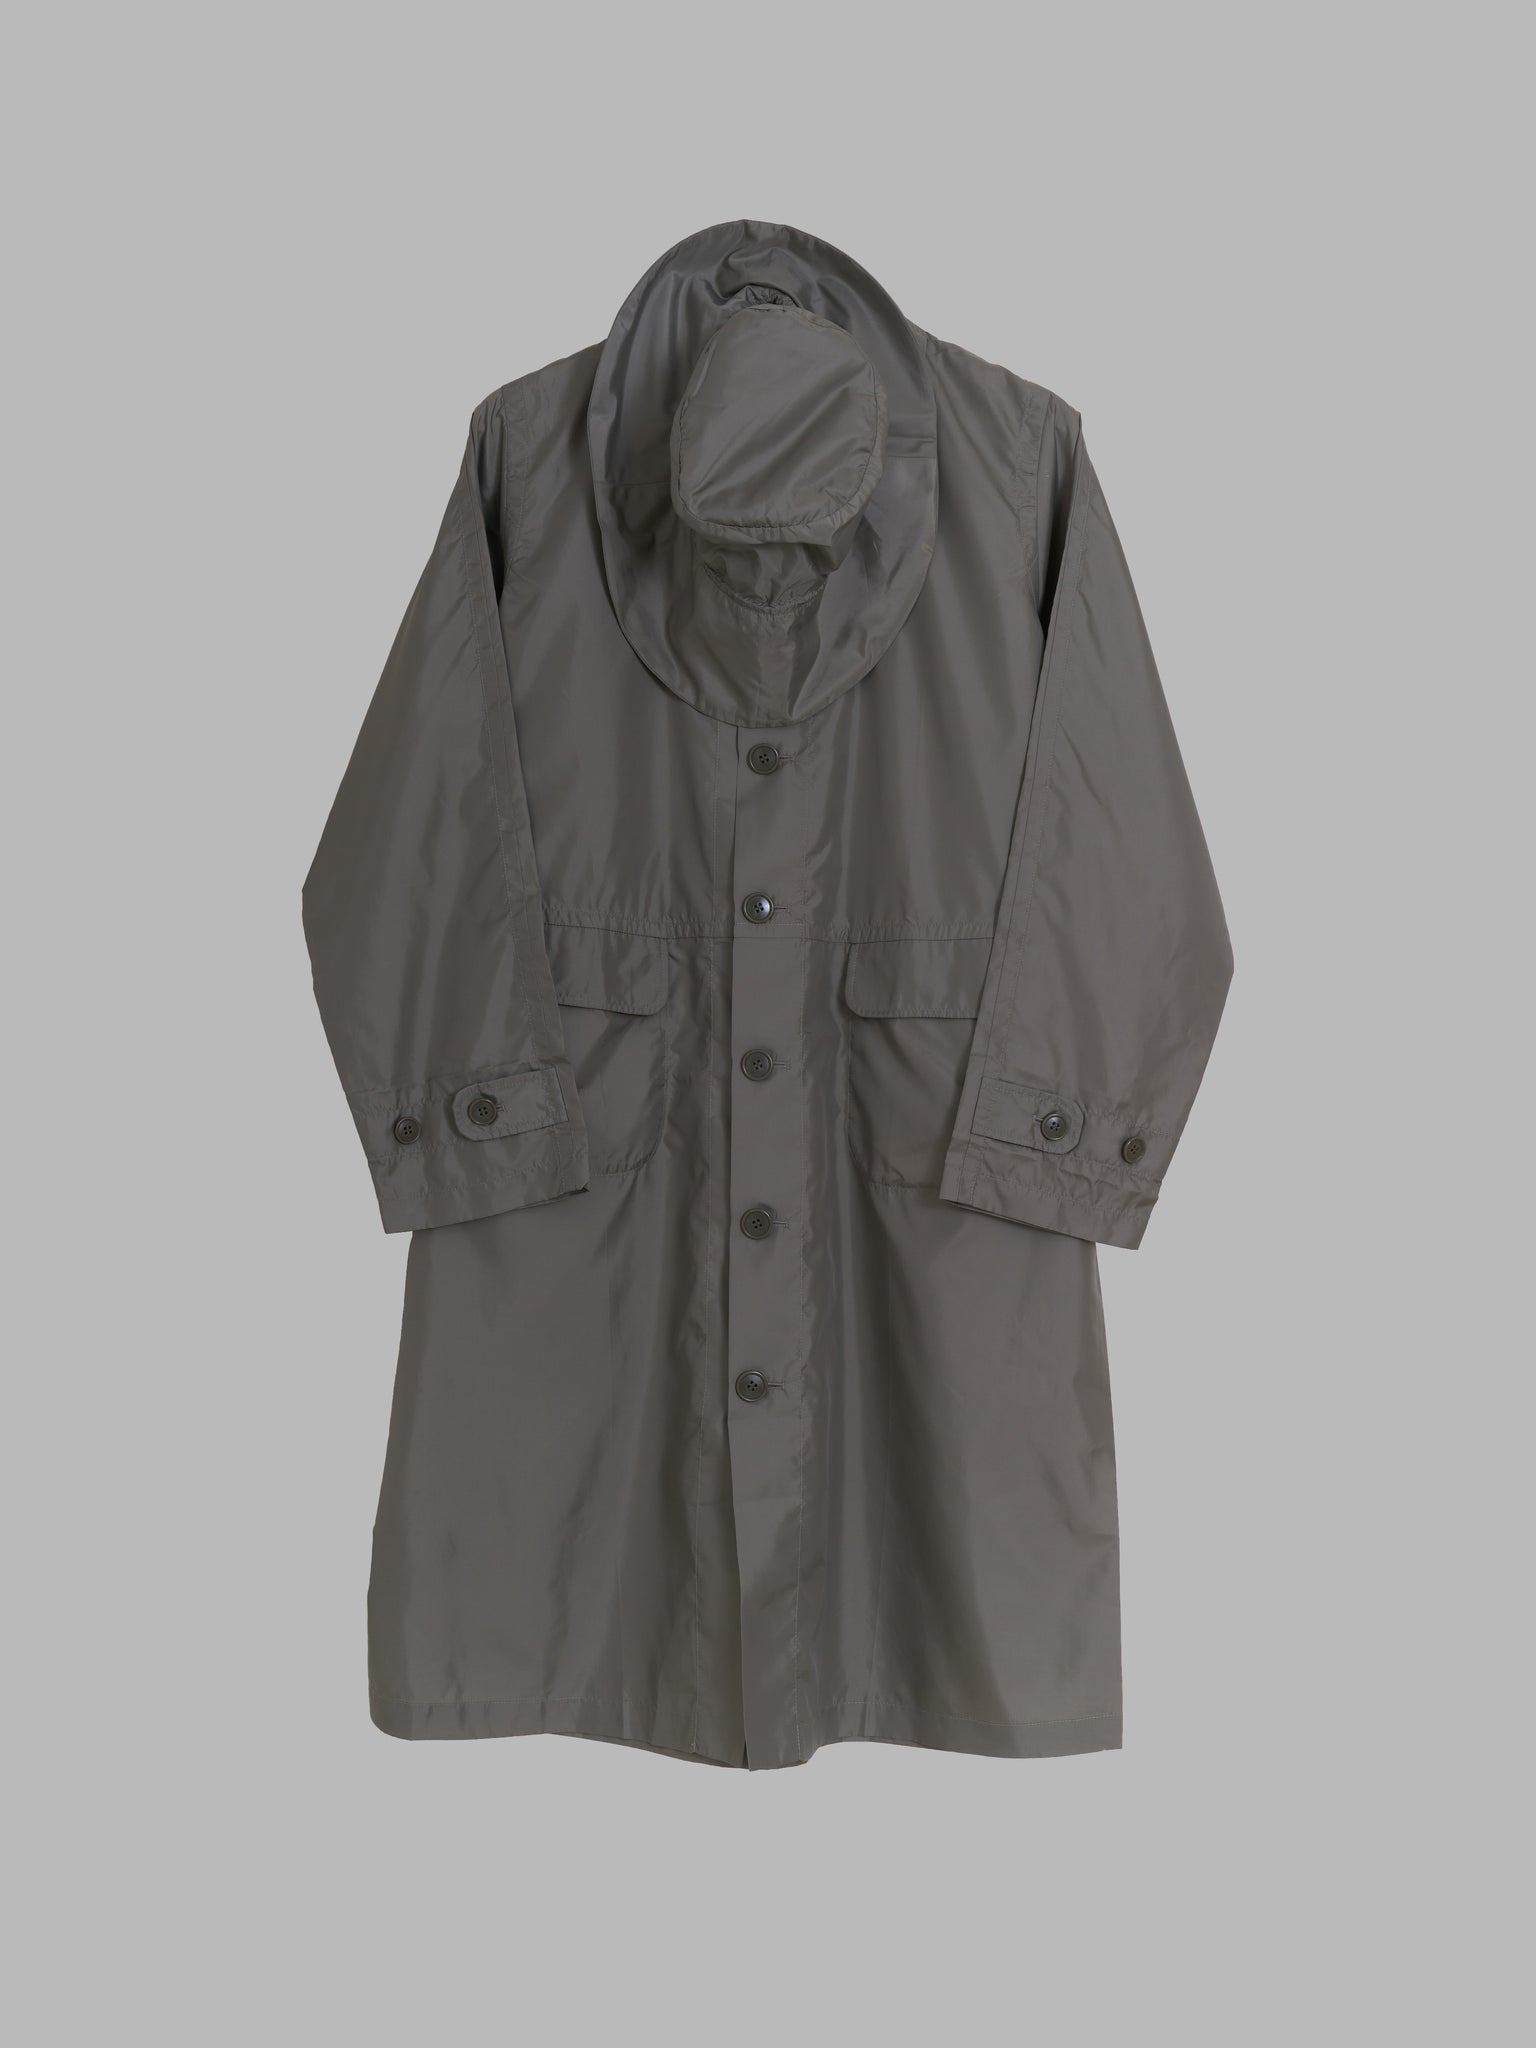 Yohji Yamamoto Y's For Living khaki raincoat with matching hat